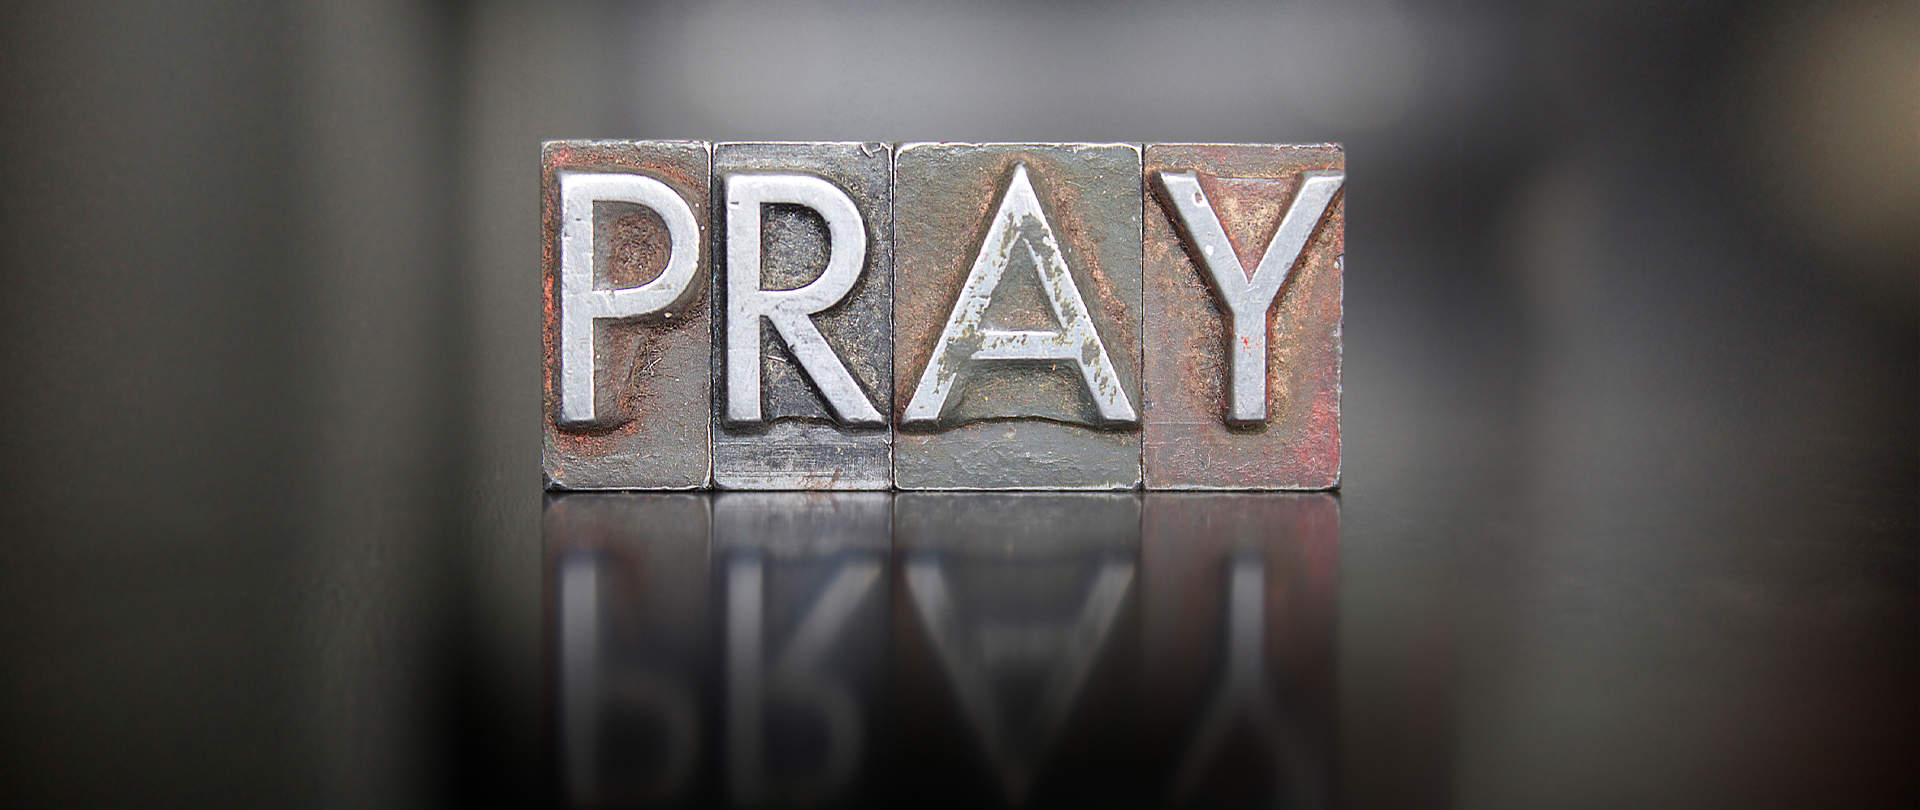 Prayer Requests
